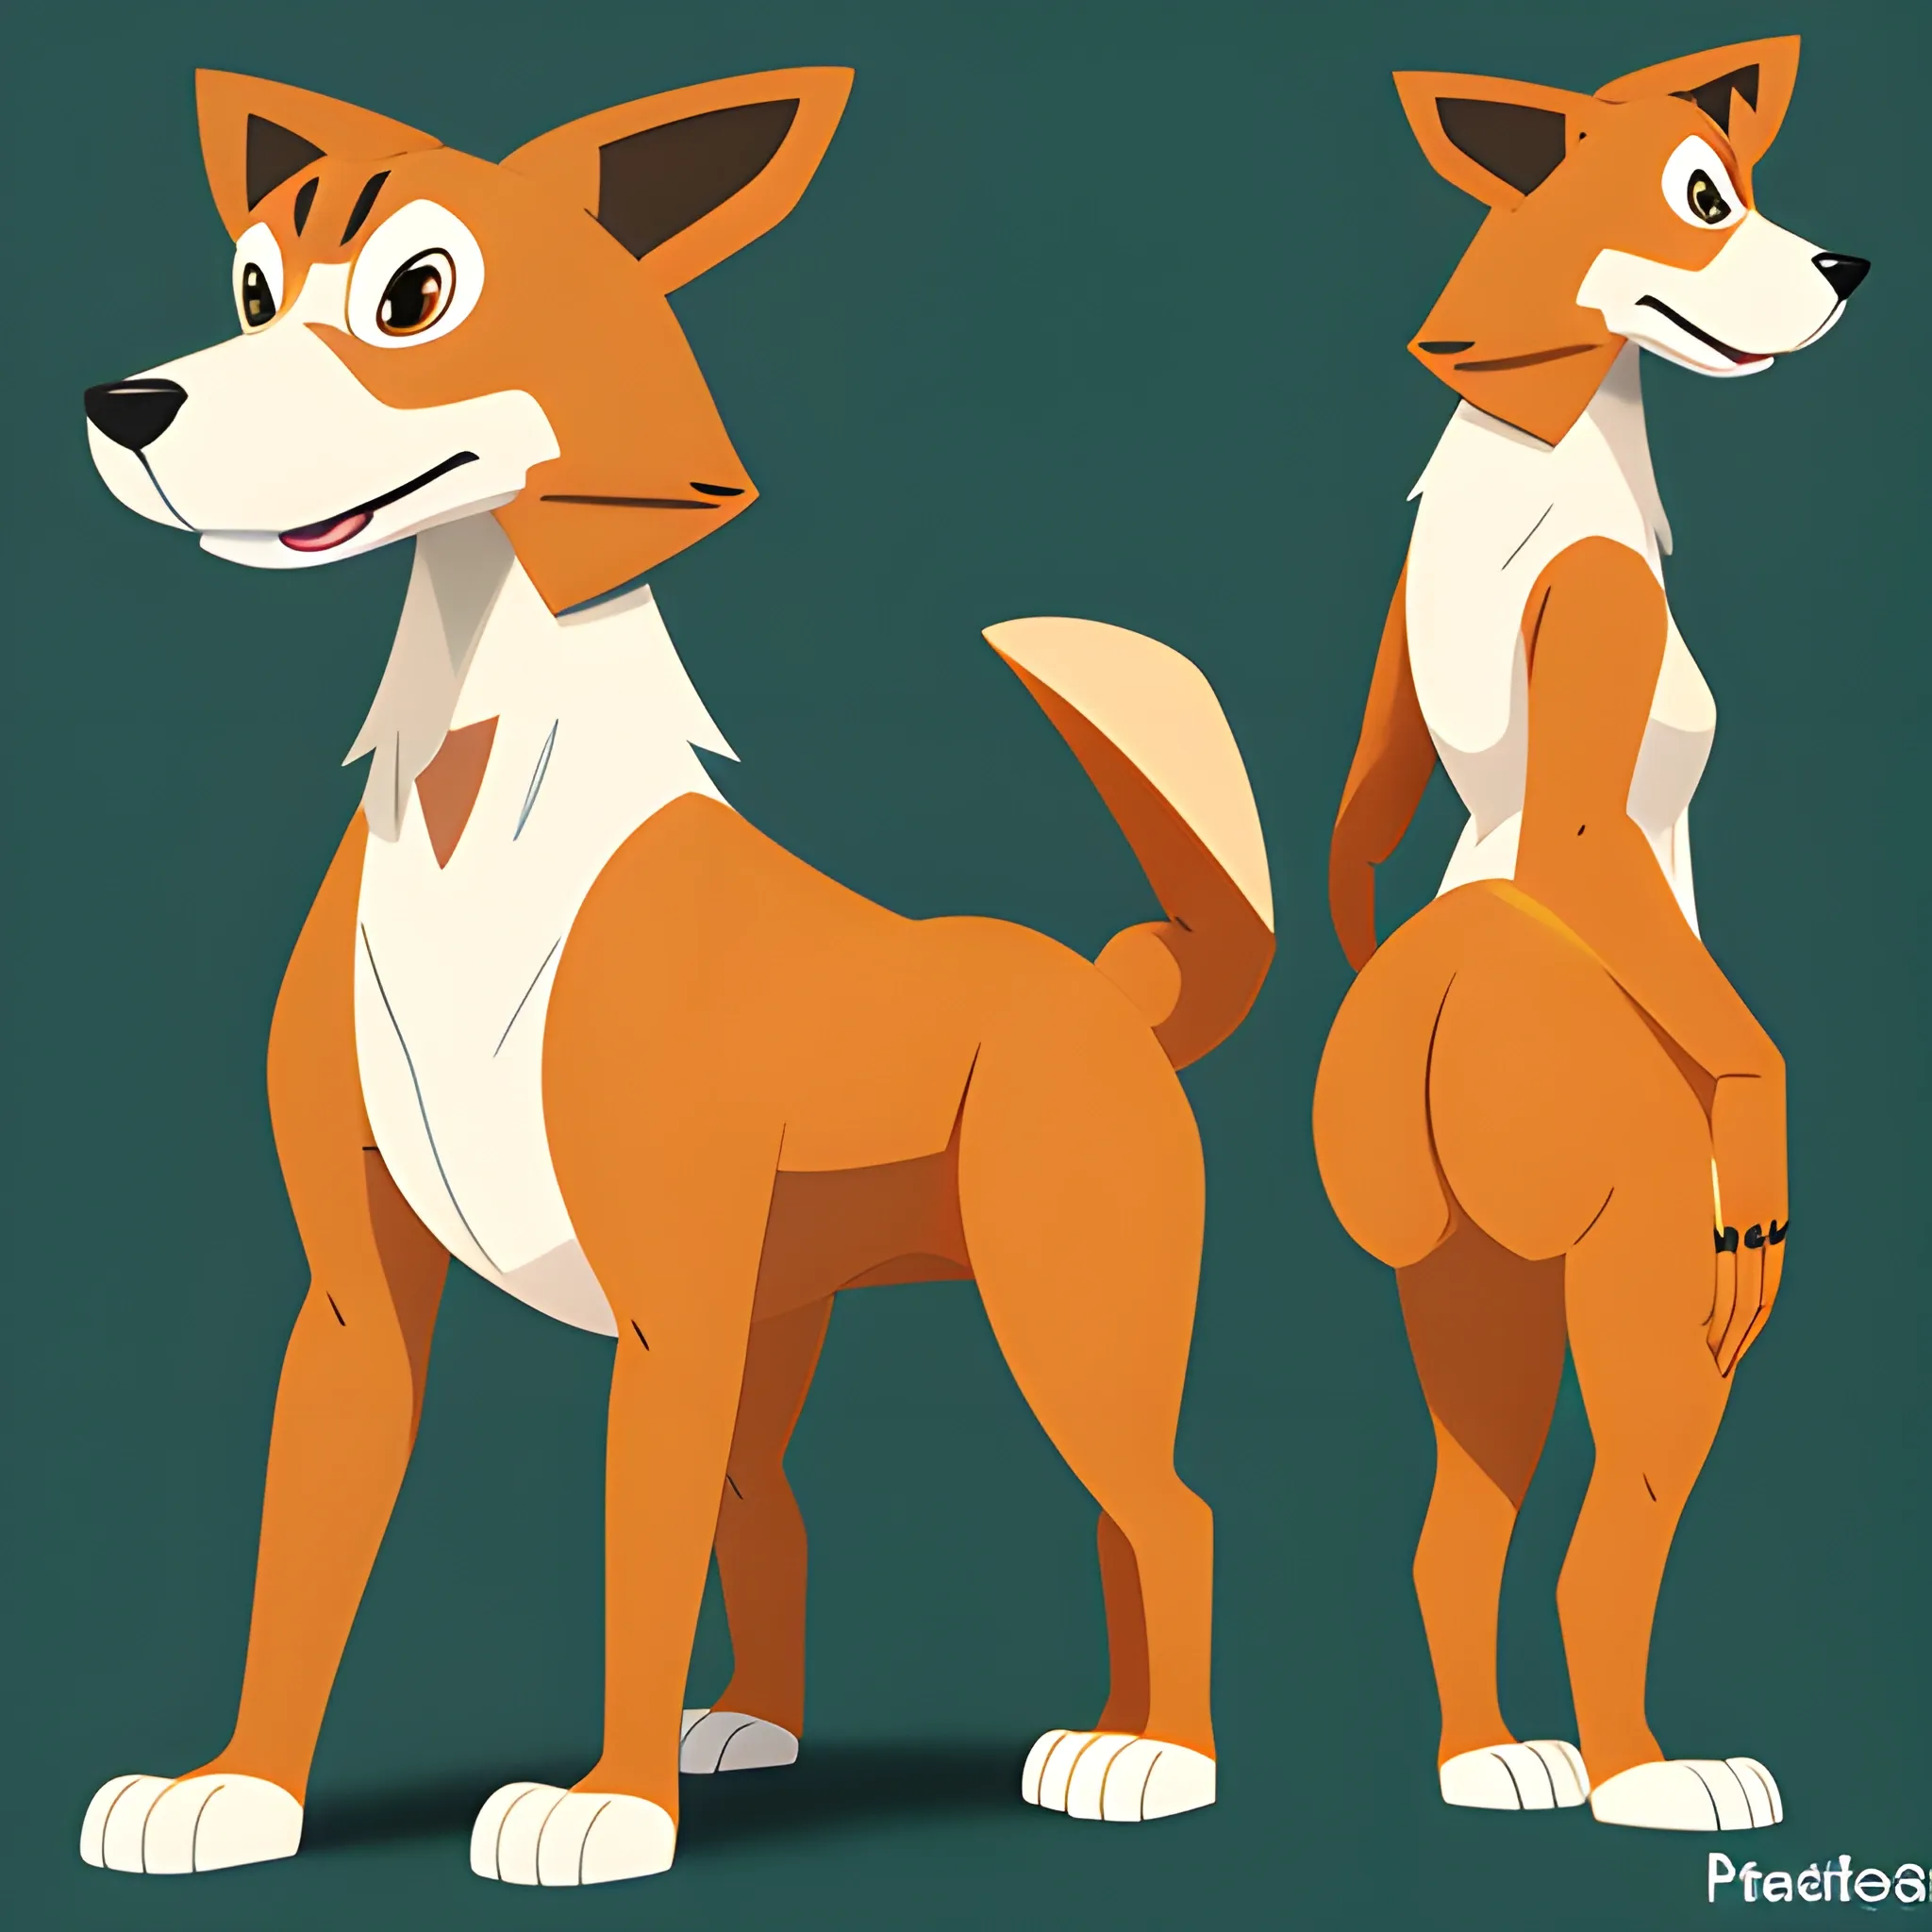 cartoon character. full body. animal dog humanlike

